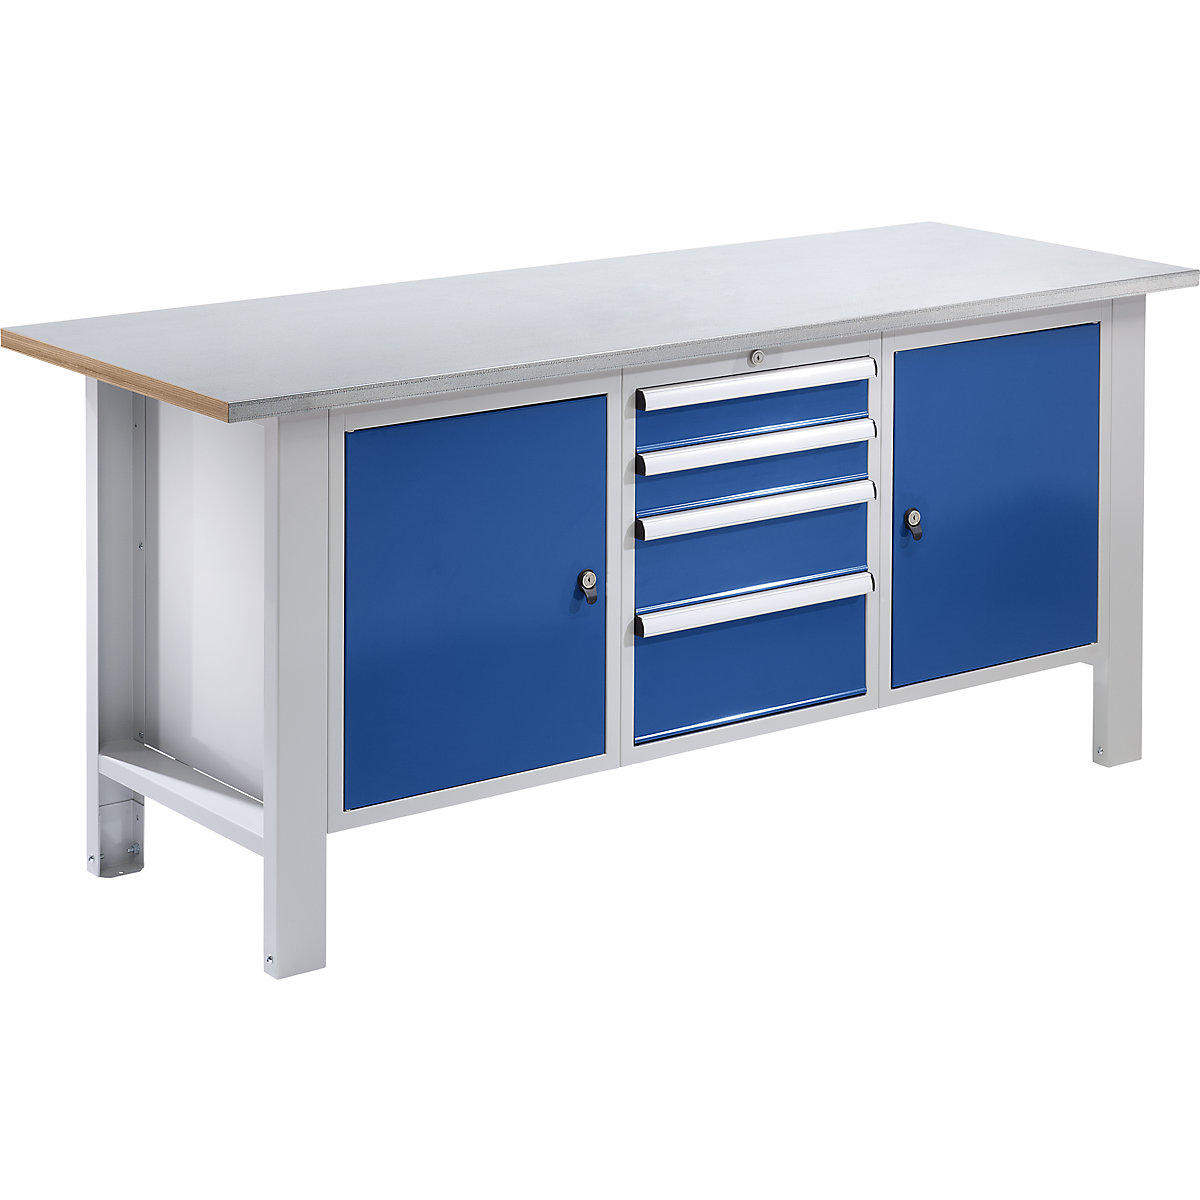 Workbench, modular system – eurokraft basic, worktop width 1850 mm, 4 drawers, 2 doors, sheet steel covered worktop-2